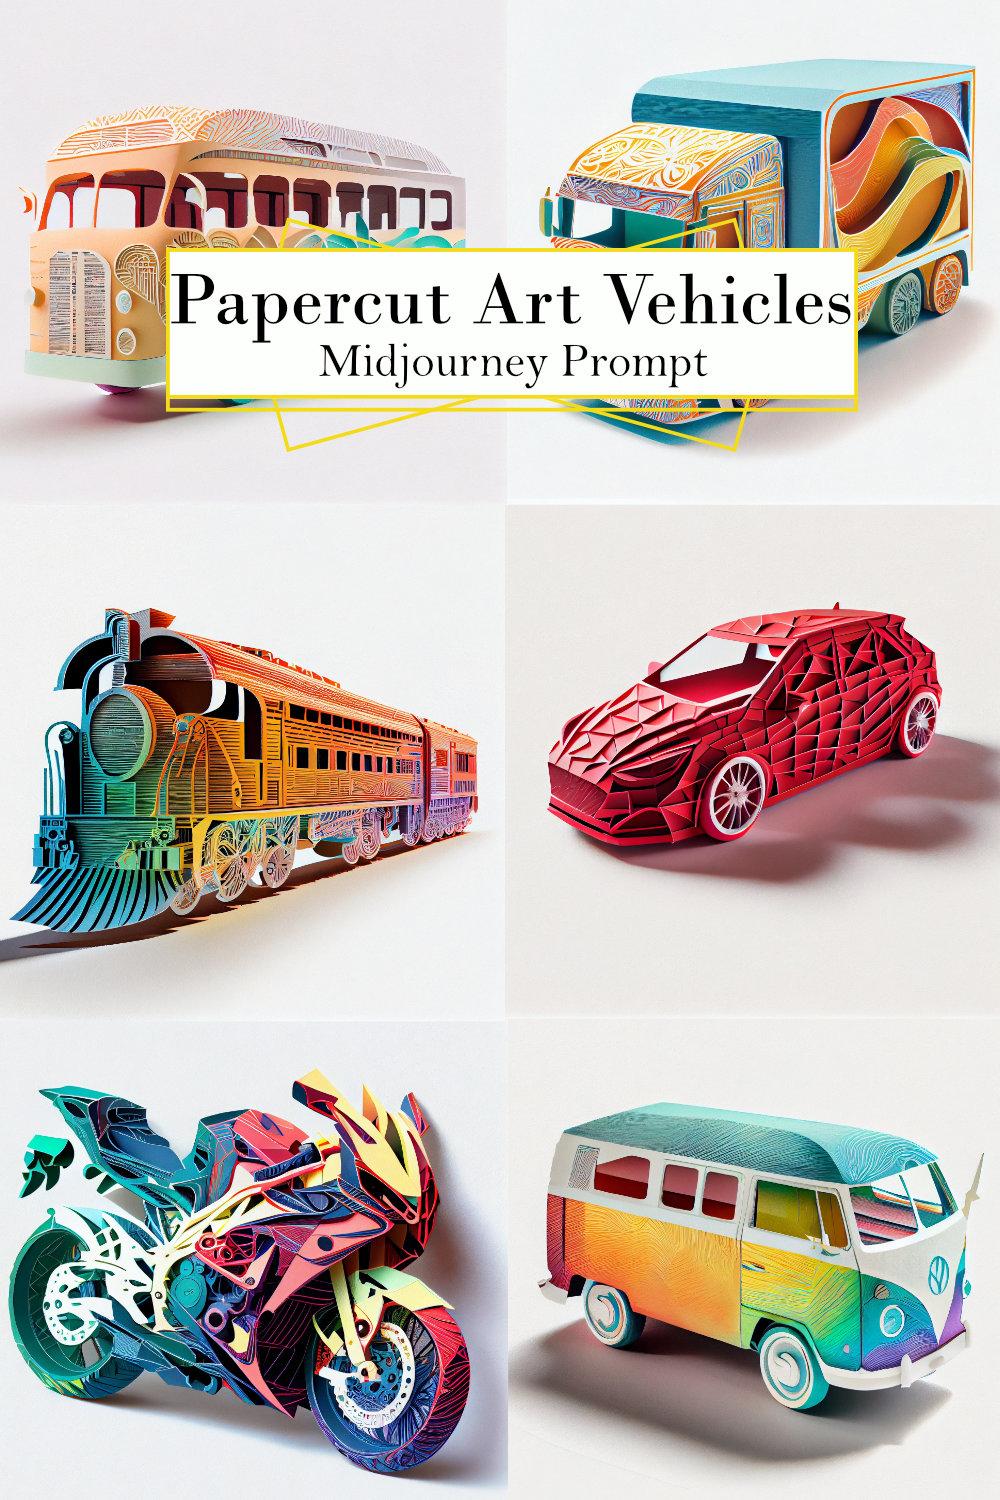 Papercut Art Vehicles Midjourney Prompt pinterest preview image.